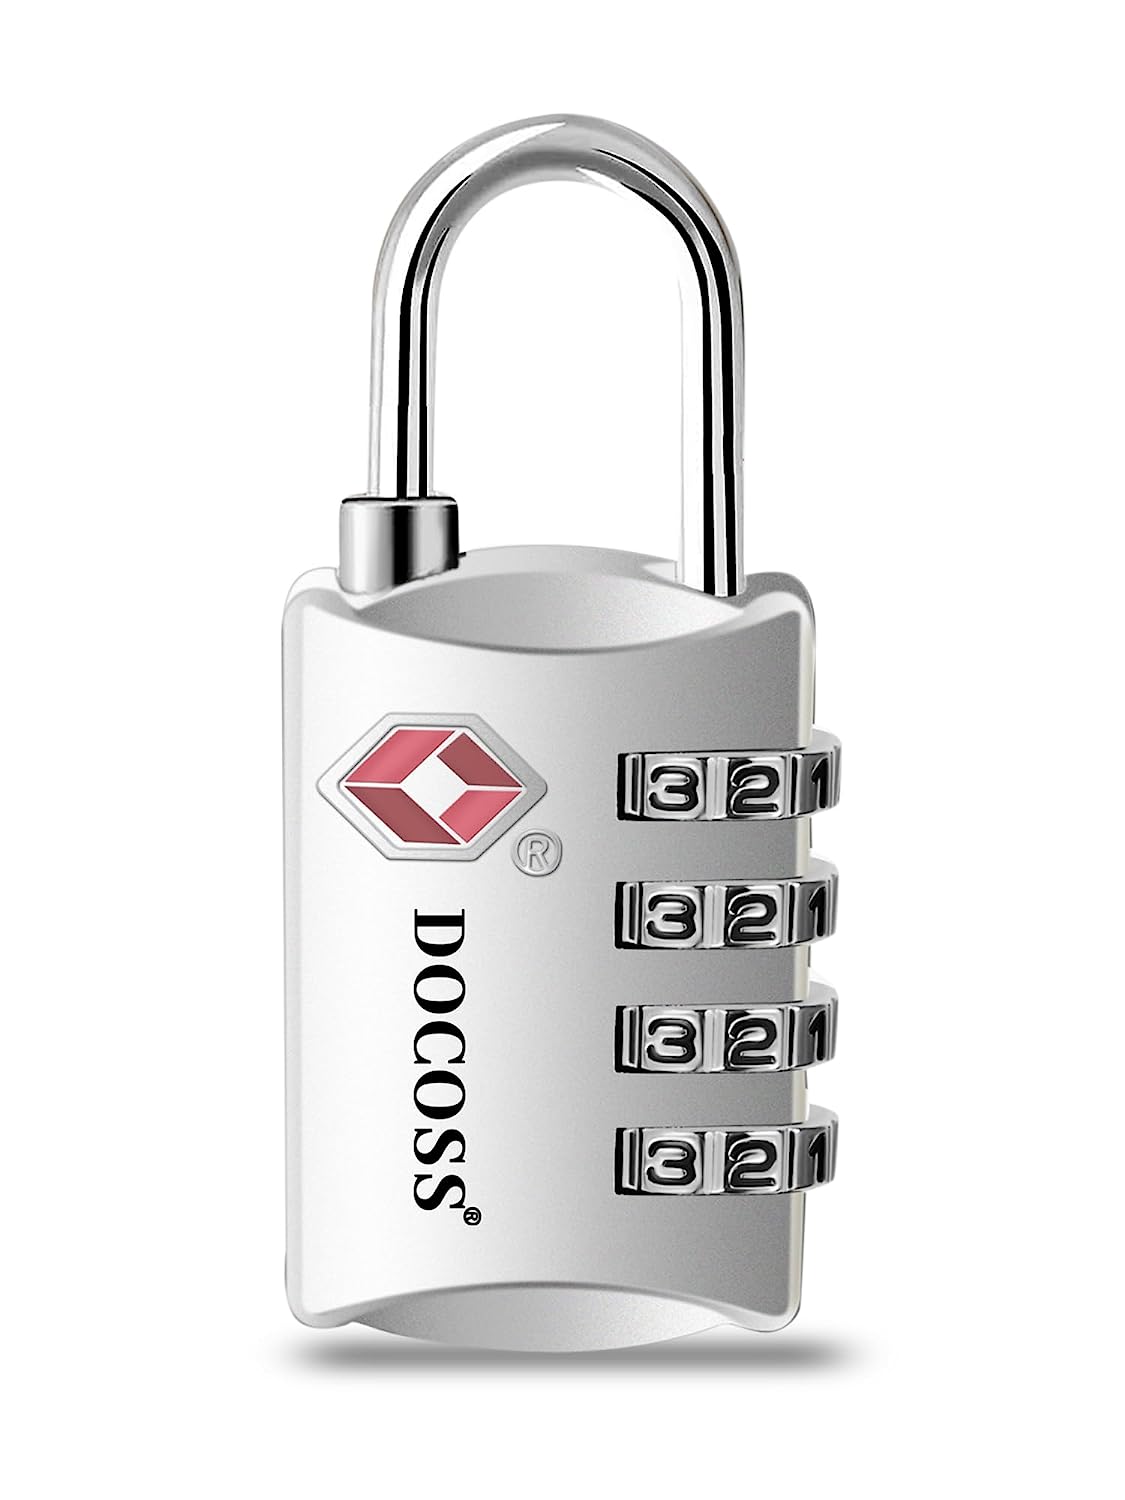 DOCOSS Metal 4 Digit Number Lock For Bag Luggage,Small Combination Lock /Password Locks -Pack of 2 (Black)